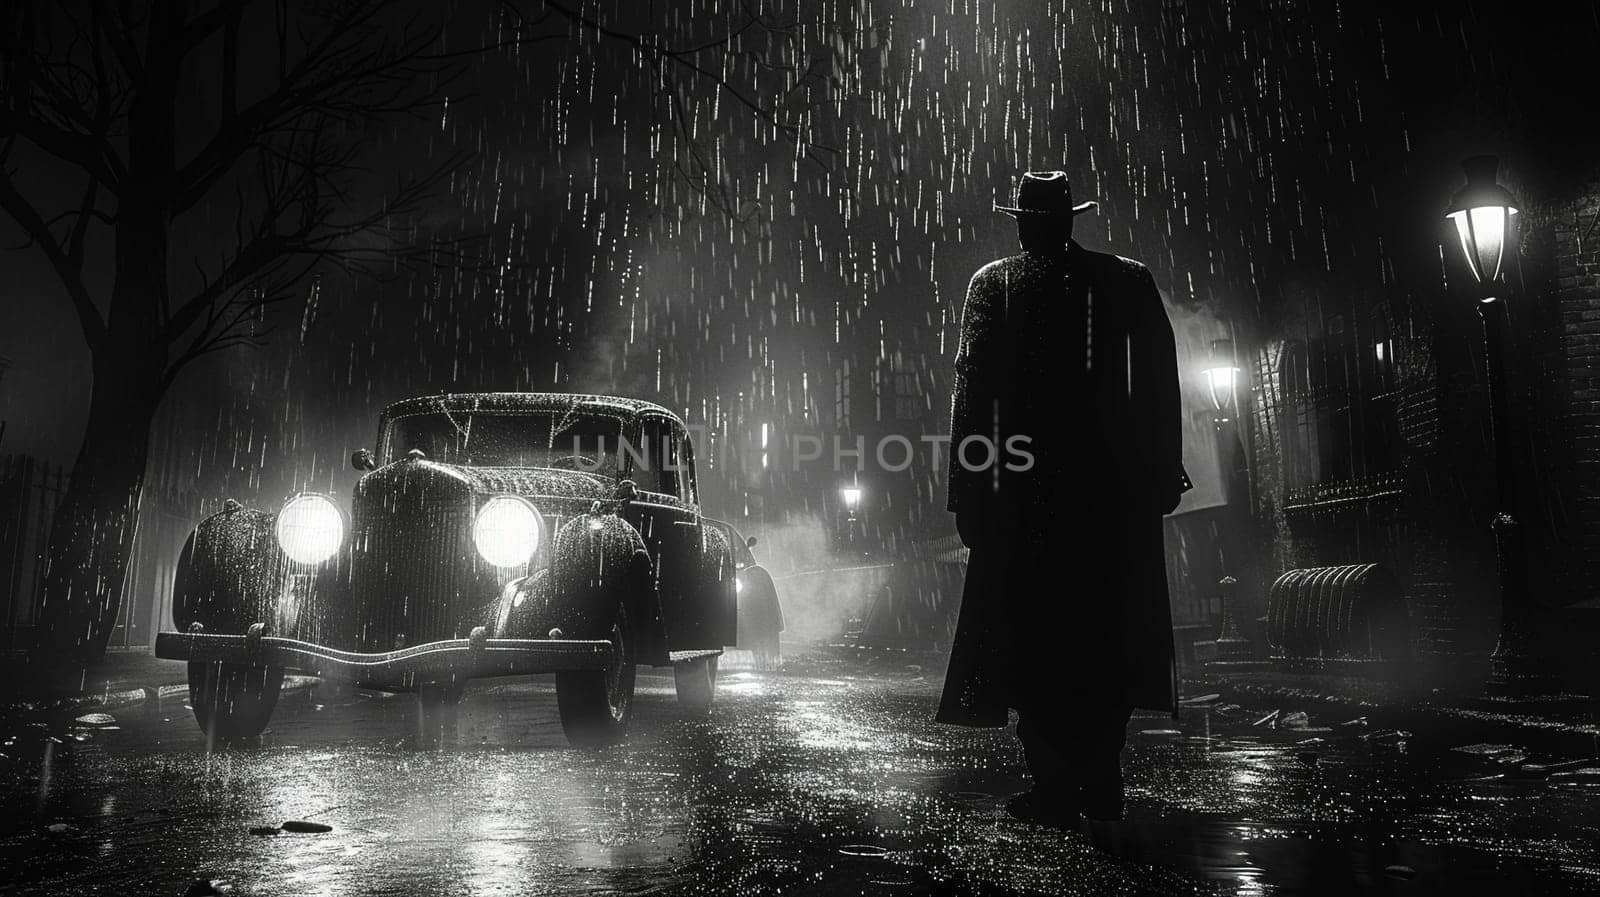 Monochrome Pixelation of a Mysterious Noir Scene A vintage detective scene blurs into stark black and white pixels by Benzoix